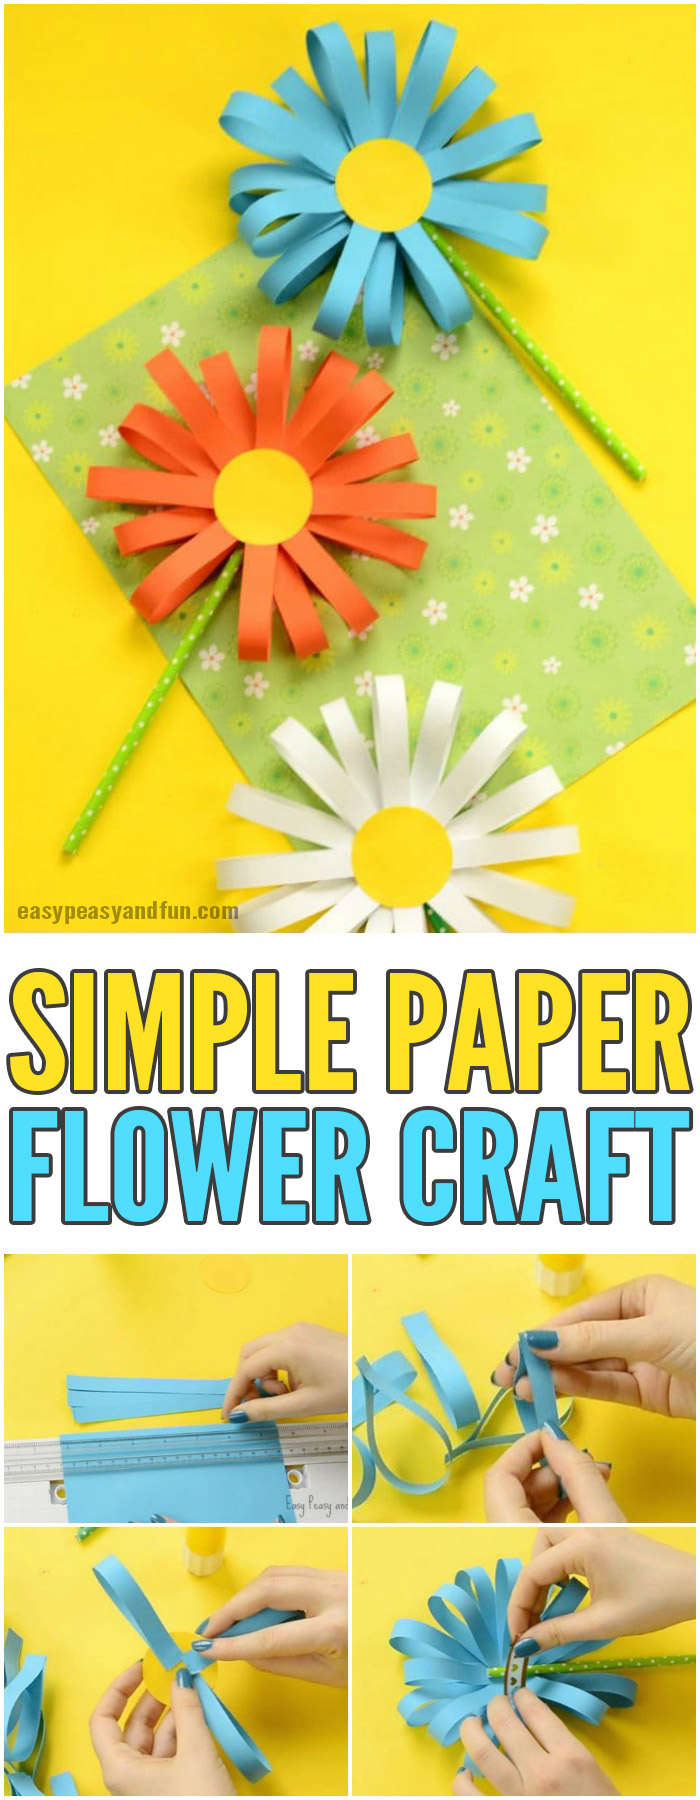 Simple Paper Flower Craft for KIds #craftsforkids #activitiesforkids #papercrafts